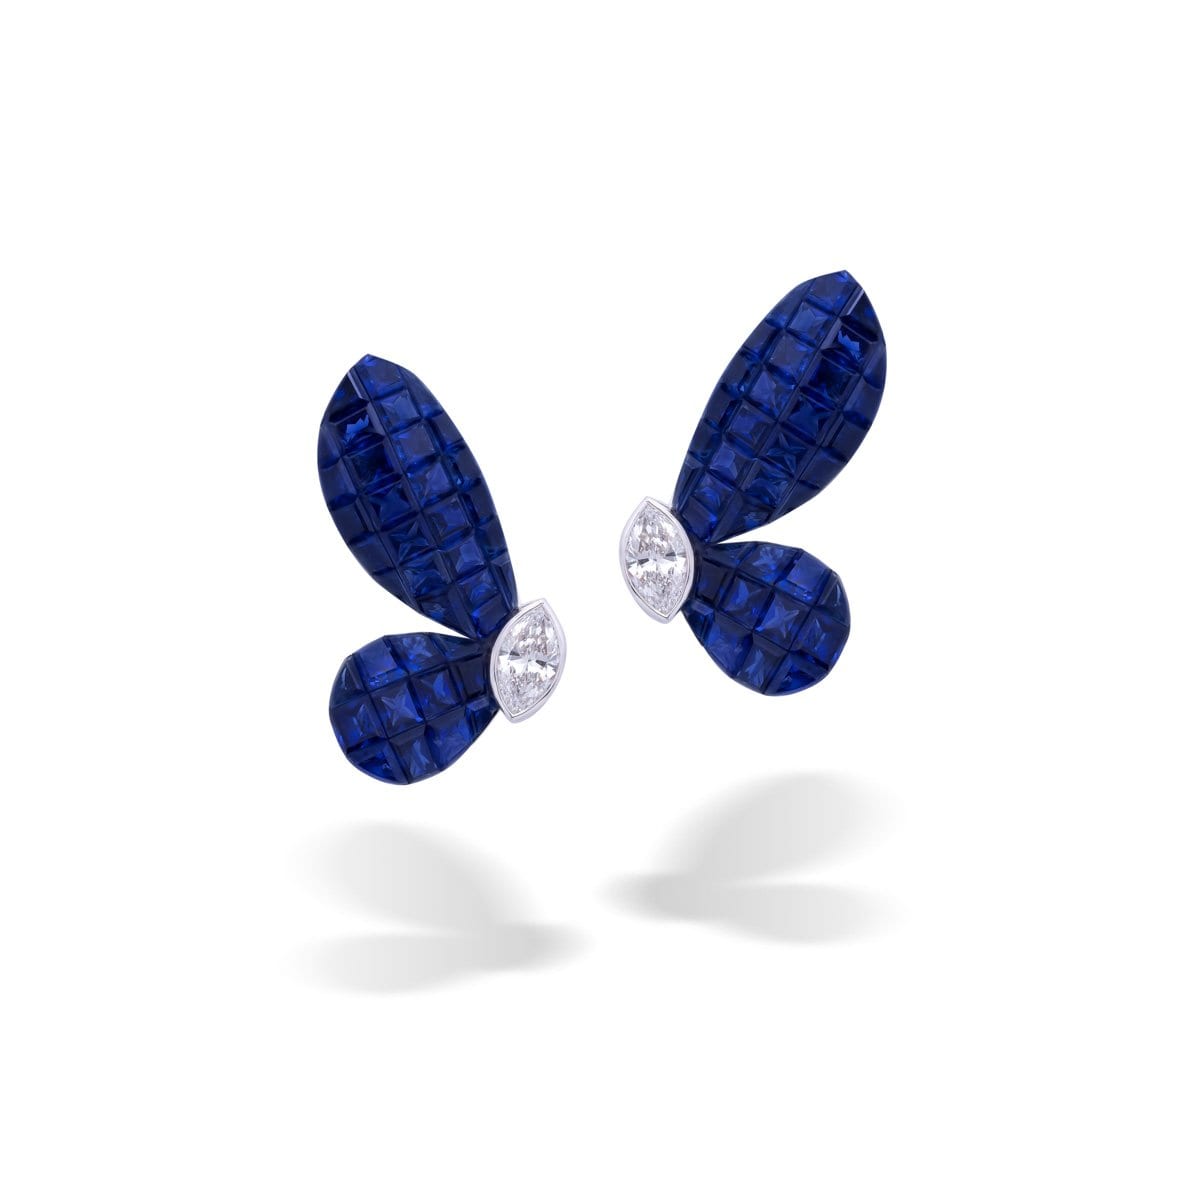 MADEMOISELLE B., round Shape Sapphire Earrings